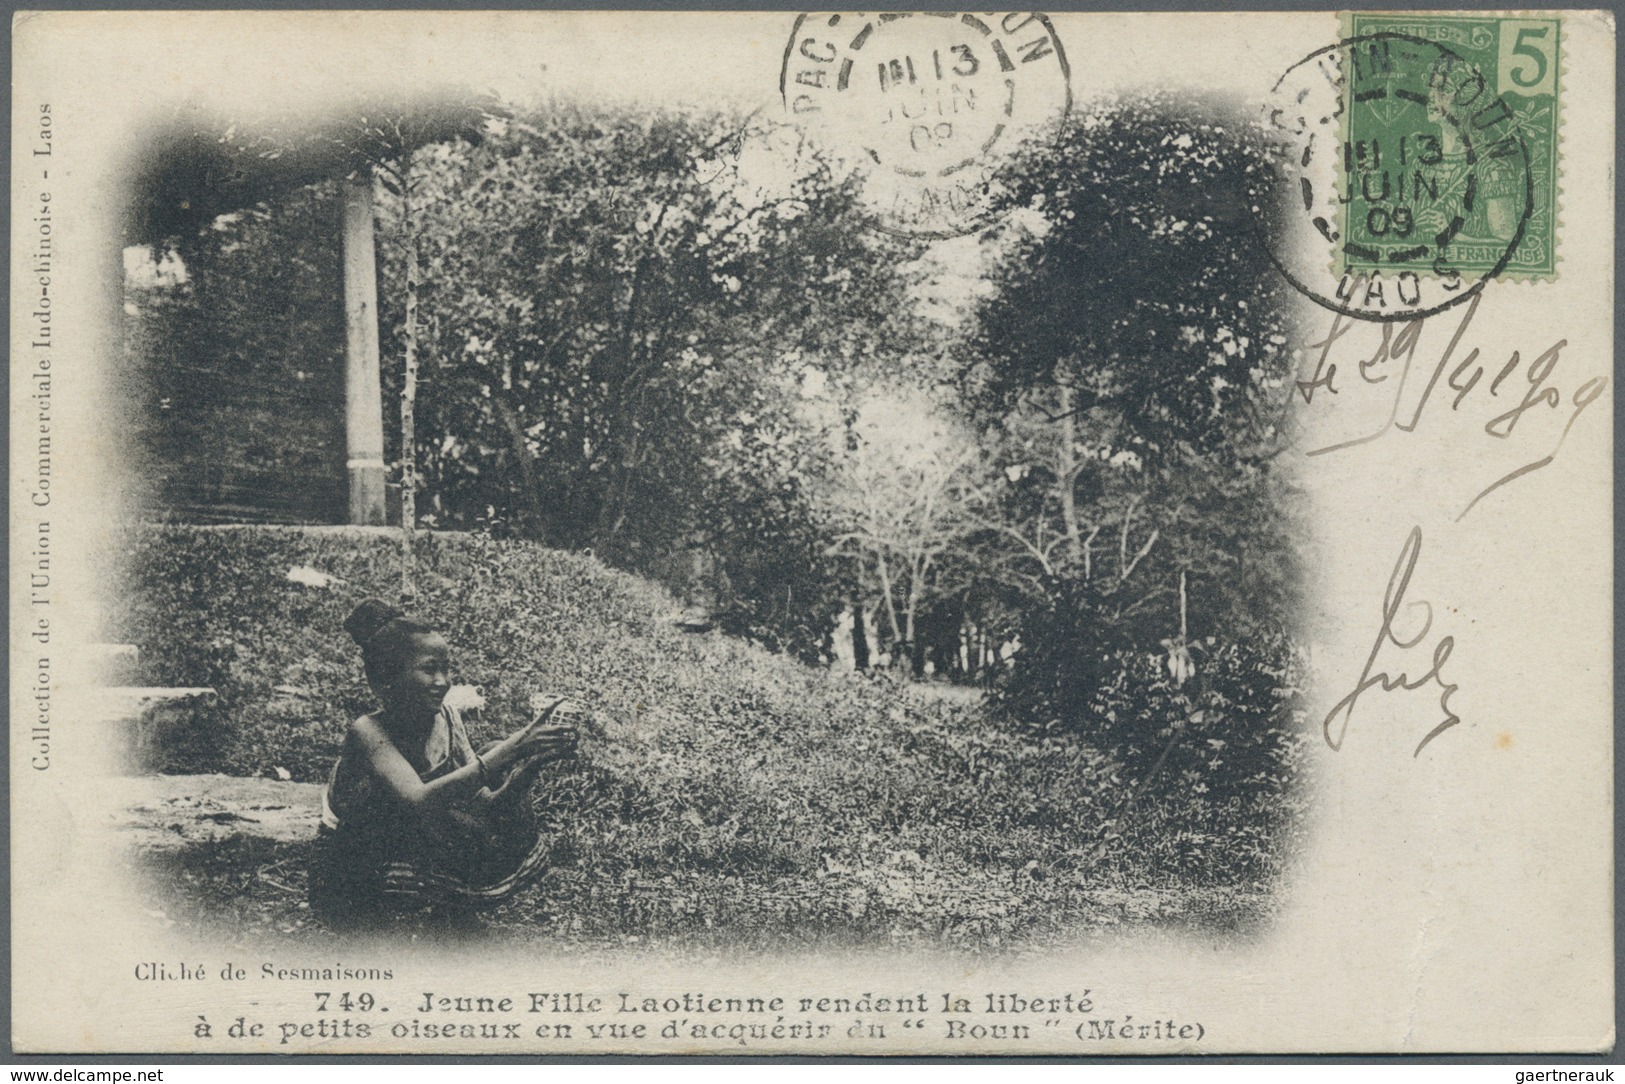 Br Laos: 1904, 5 C Green With Cds PAC-HIN-BOUN / LAOS, 13 JUIN 09, On Picture Postcard "Jeune Fille Lao - Laos